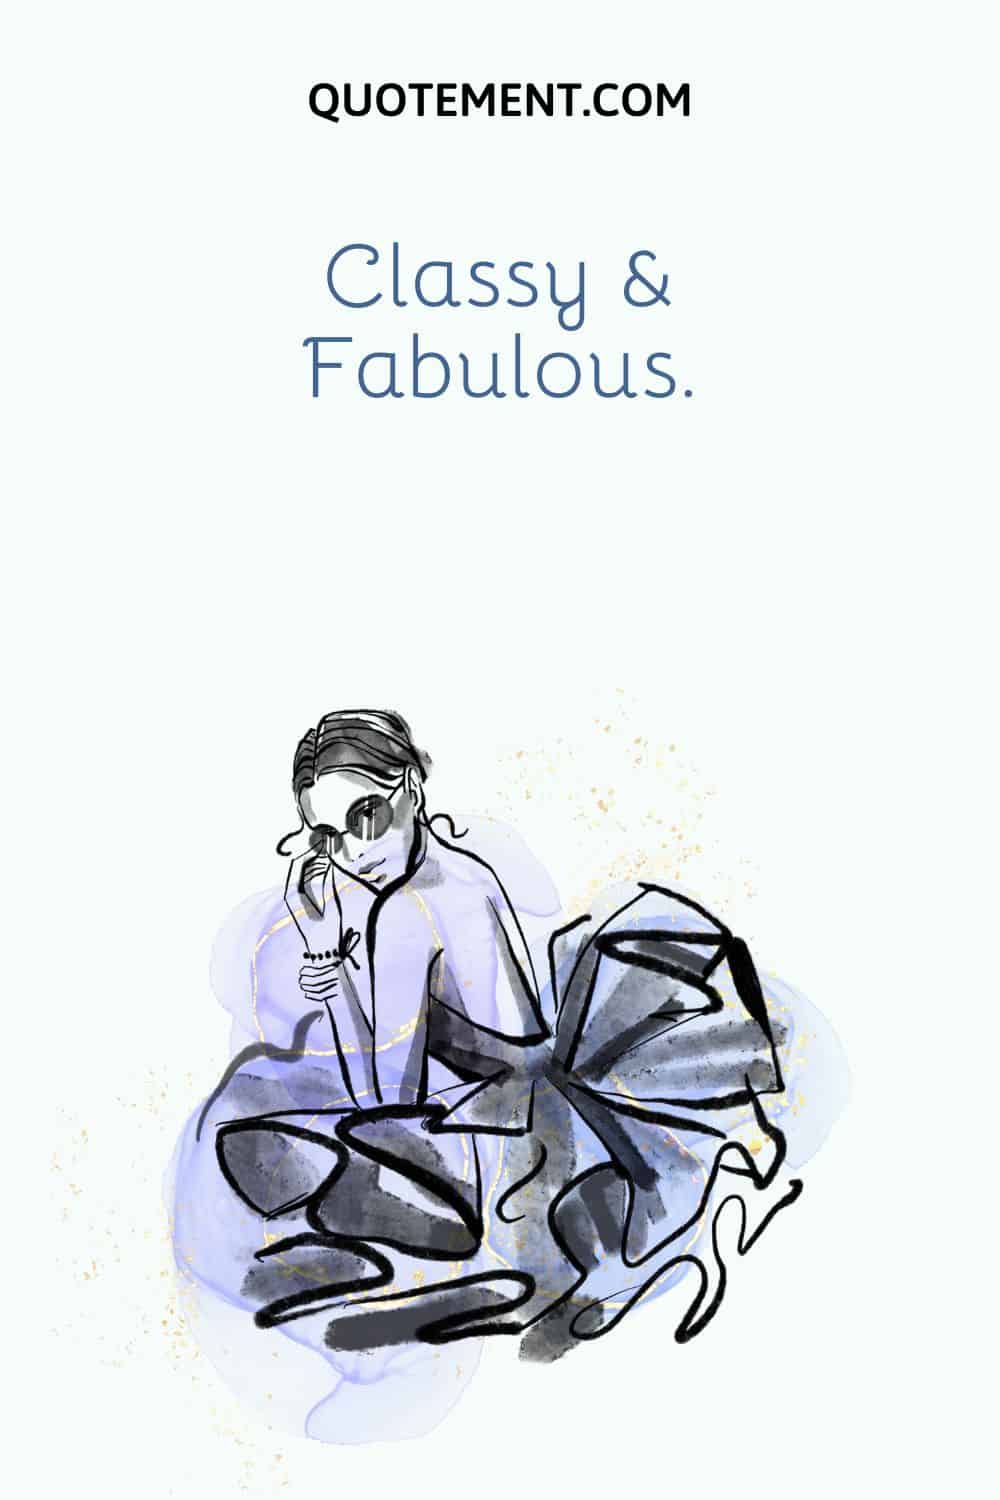 classy girl image representing classy caption for Instagram